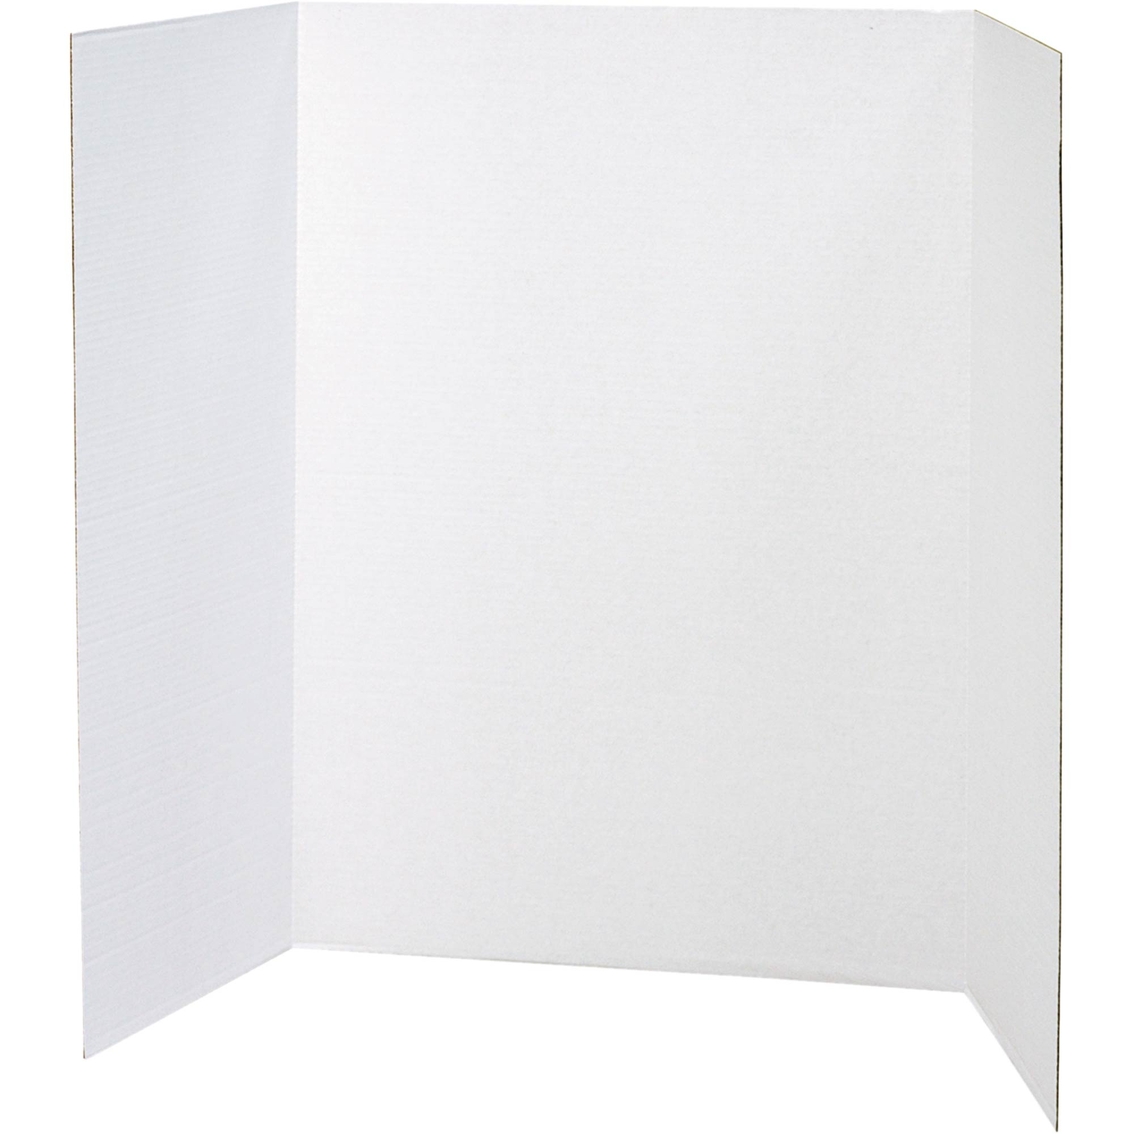 Pacon Spotlight Presentation Board 48x36 White, 24/Carton - Image 2 of 2